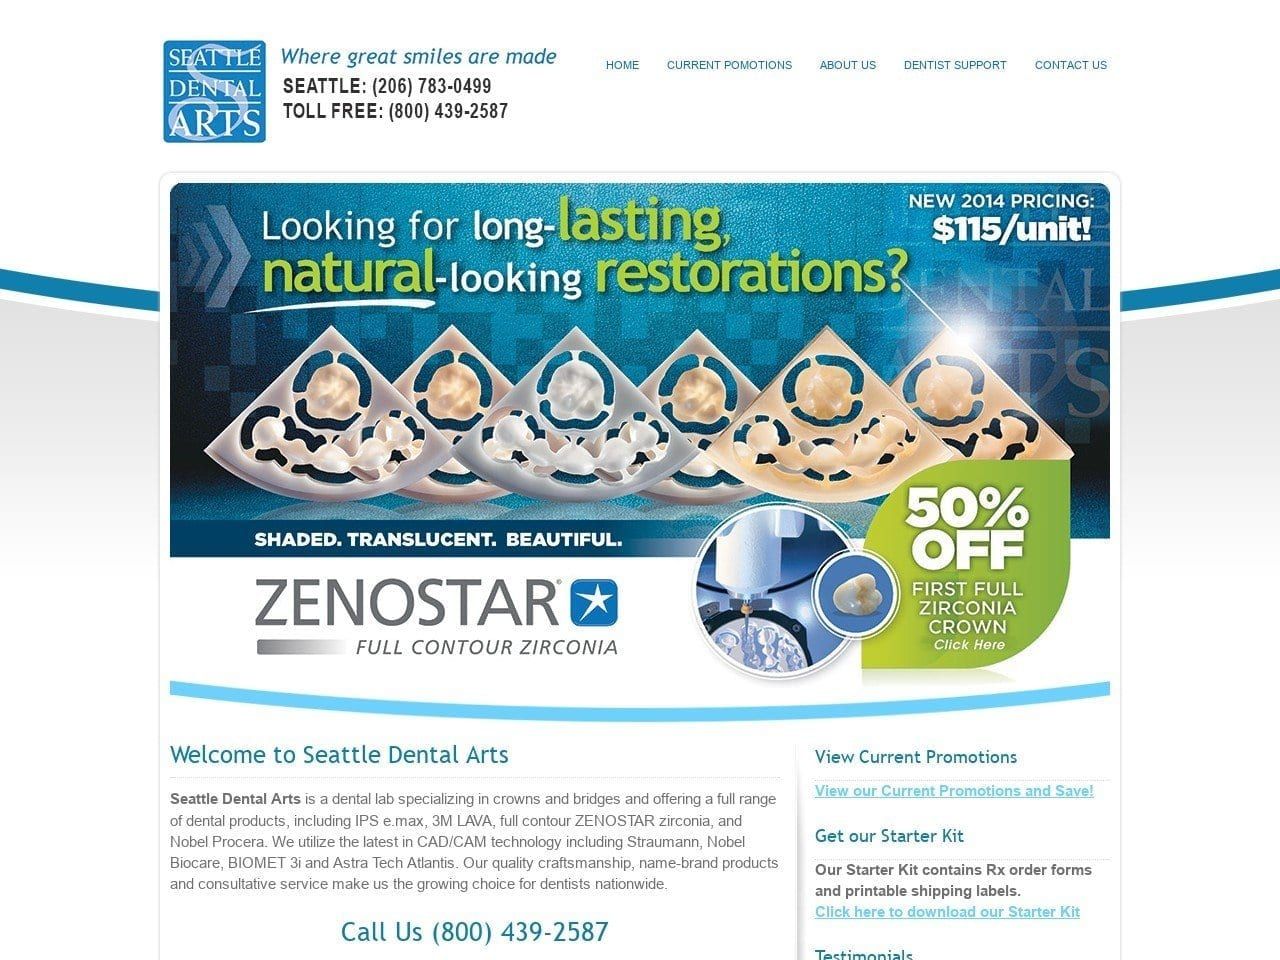 Seattle Dental Arts Website Screenshot from seattledentalarts.com